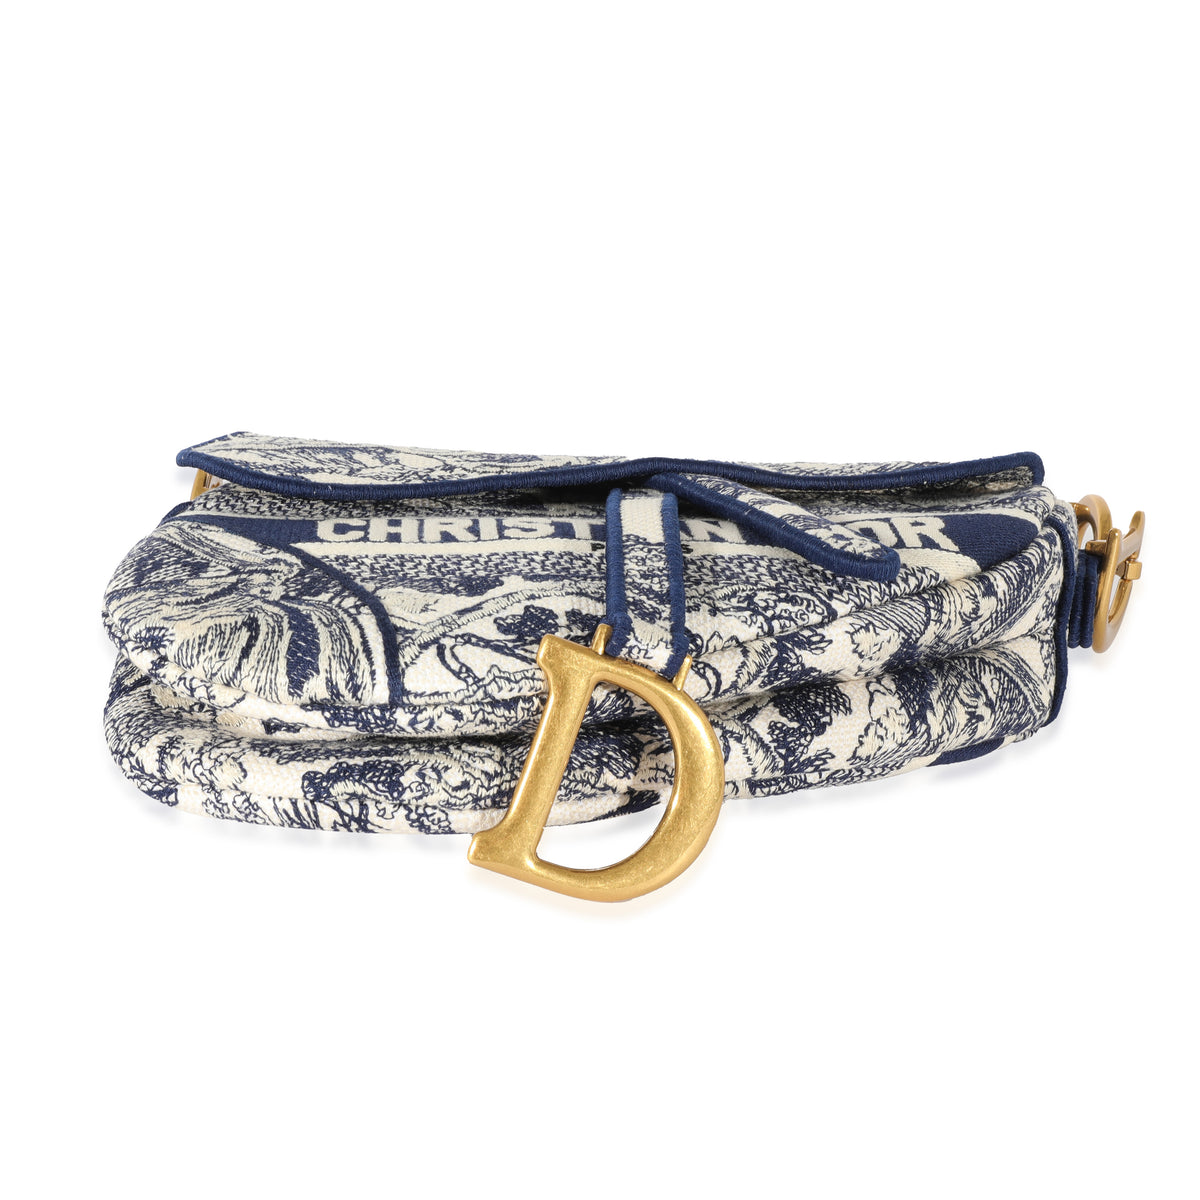 Christian Dior Blue Toile de Jouy Saddle Bag Embroidery Canvas Shoulder Bag